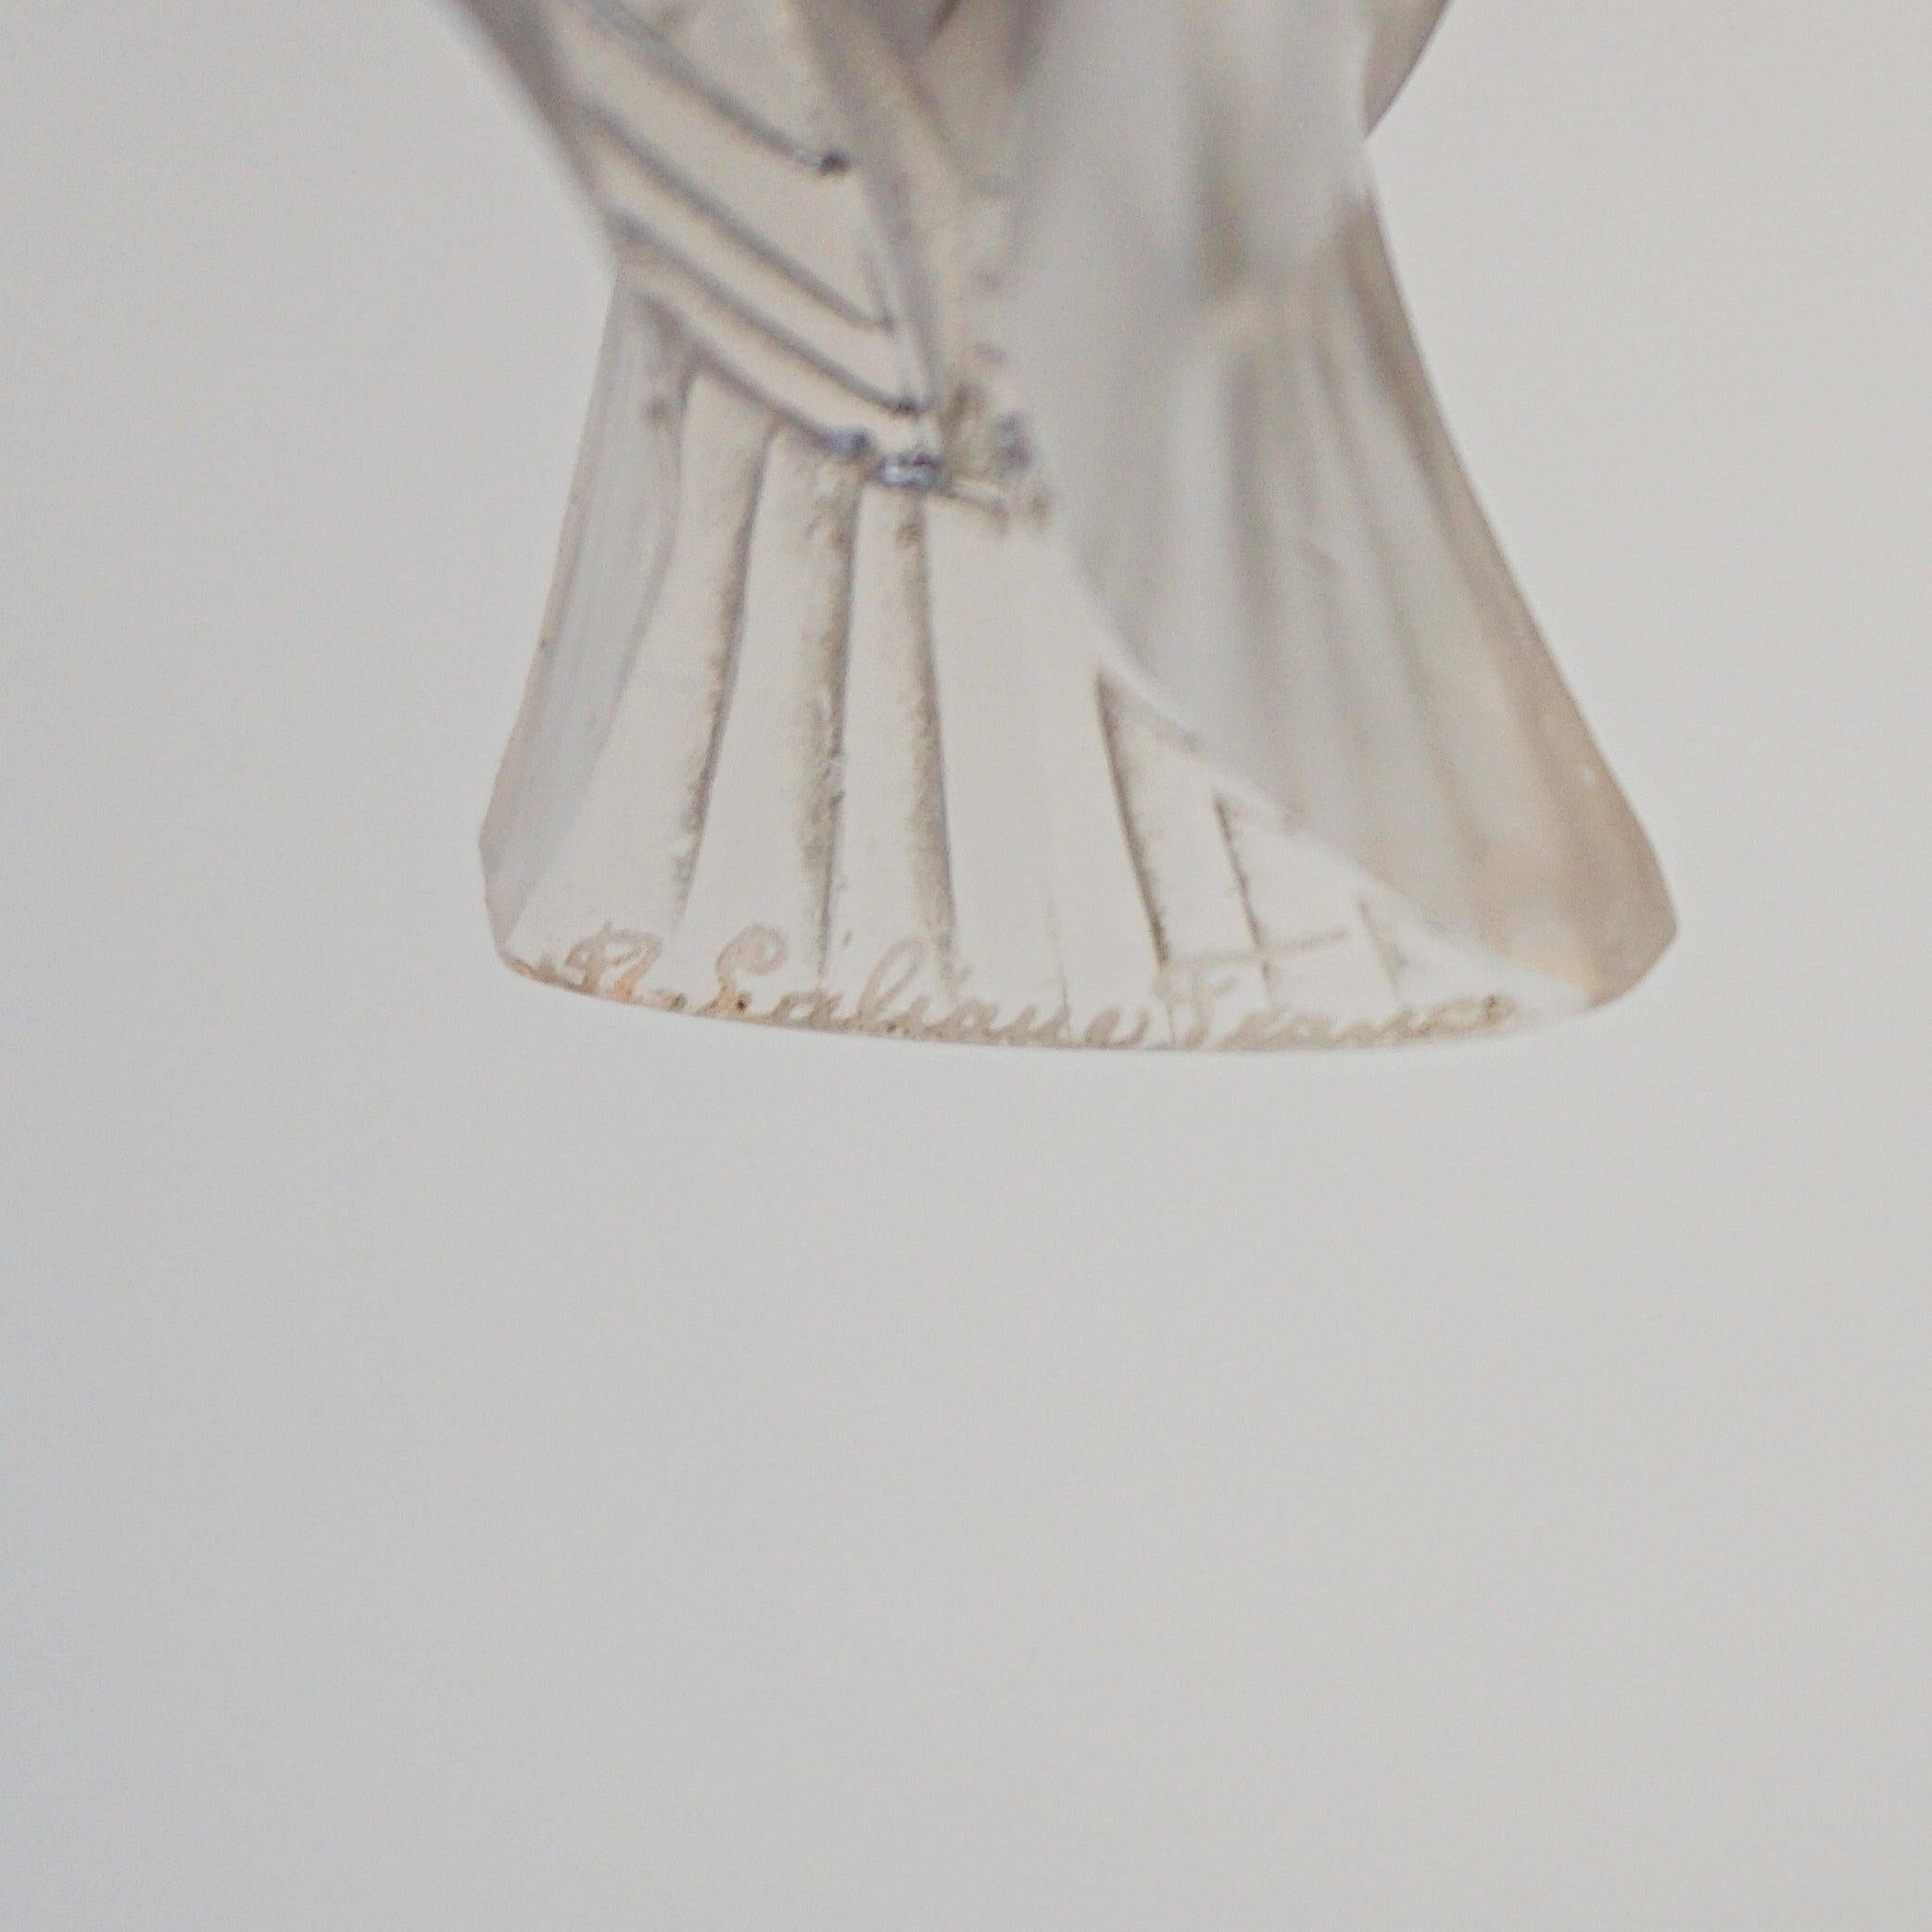 'Moineau Fier' a Proud Sparrow Art Deco Glass Paperweight 3